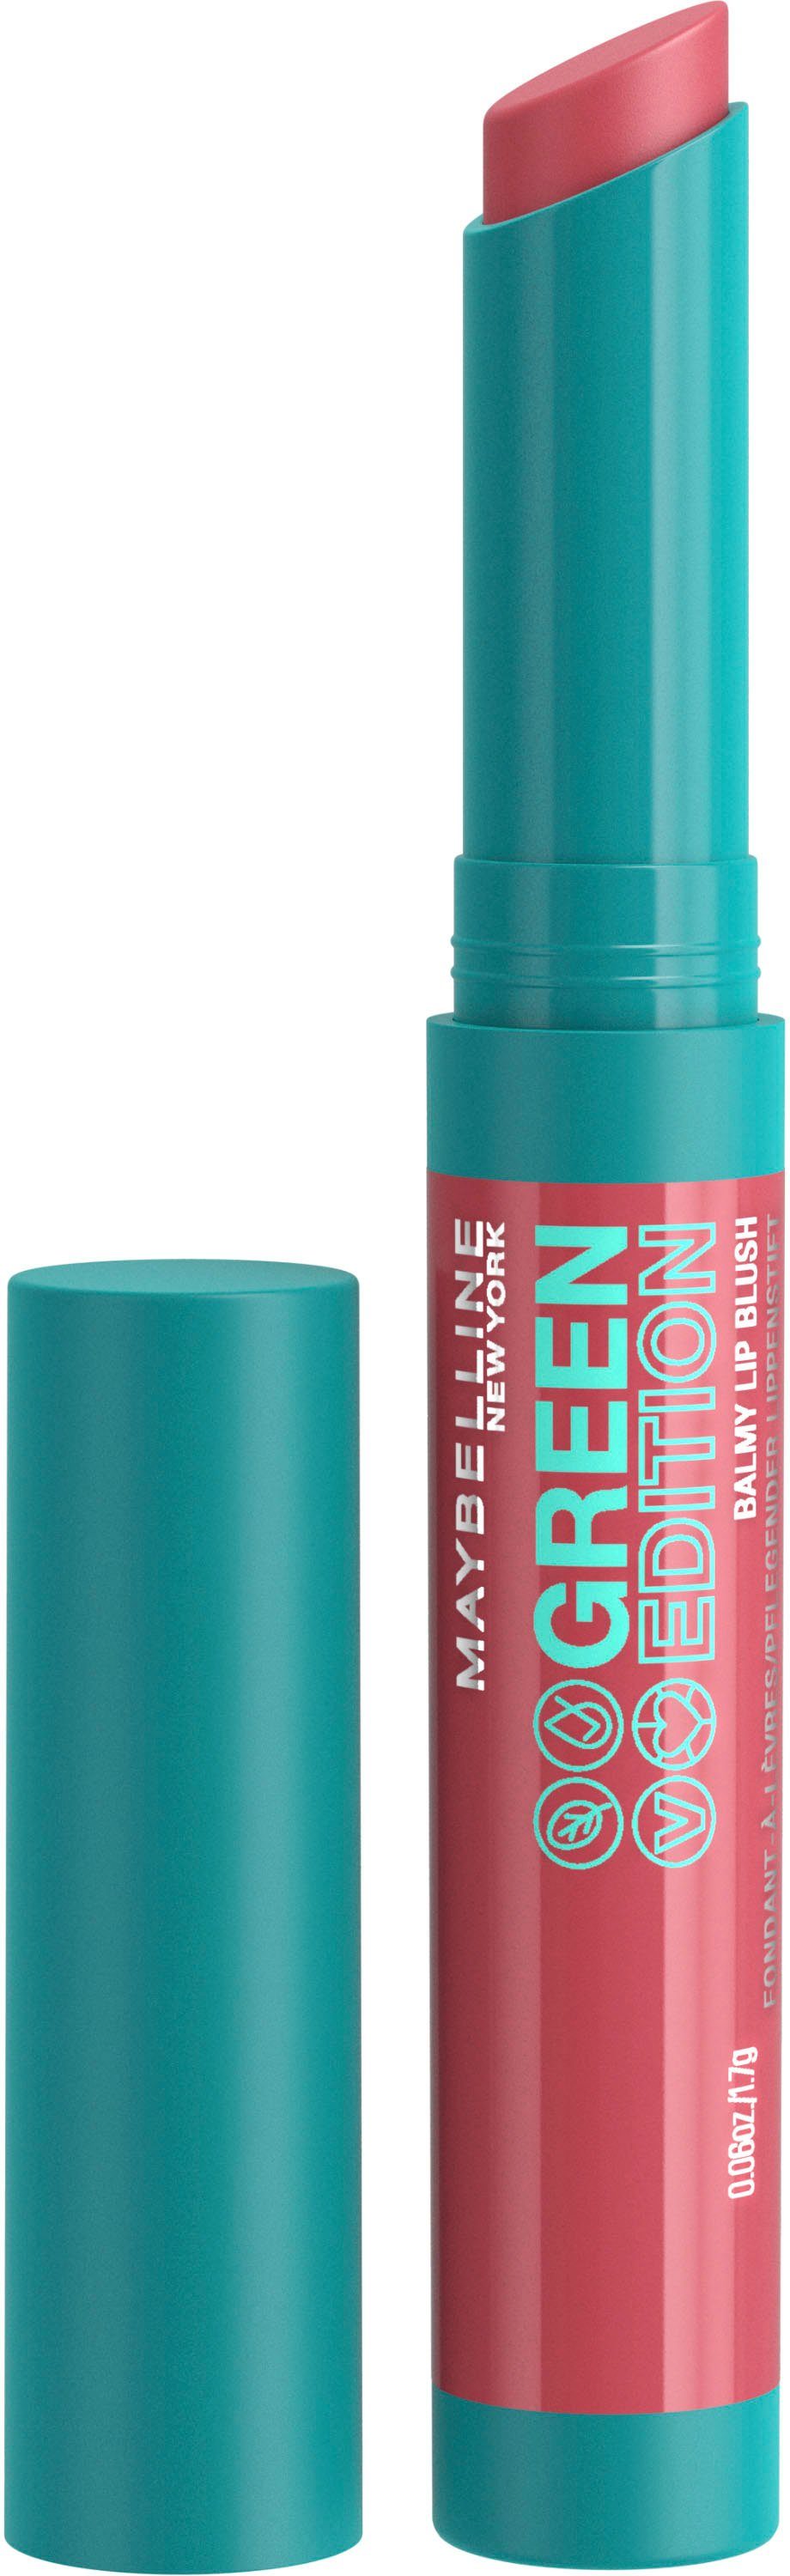 YORK Edition NEW 009 Lip MAYBELLINE Balmy Green Lippenstift Lightning Blush